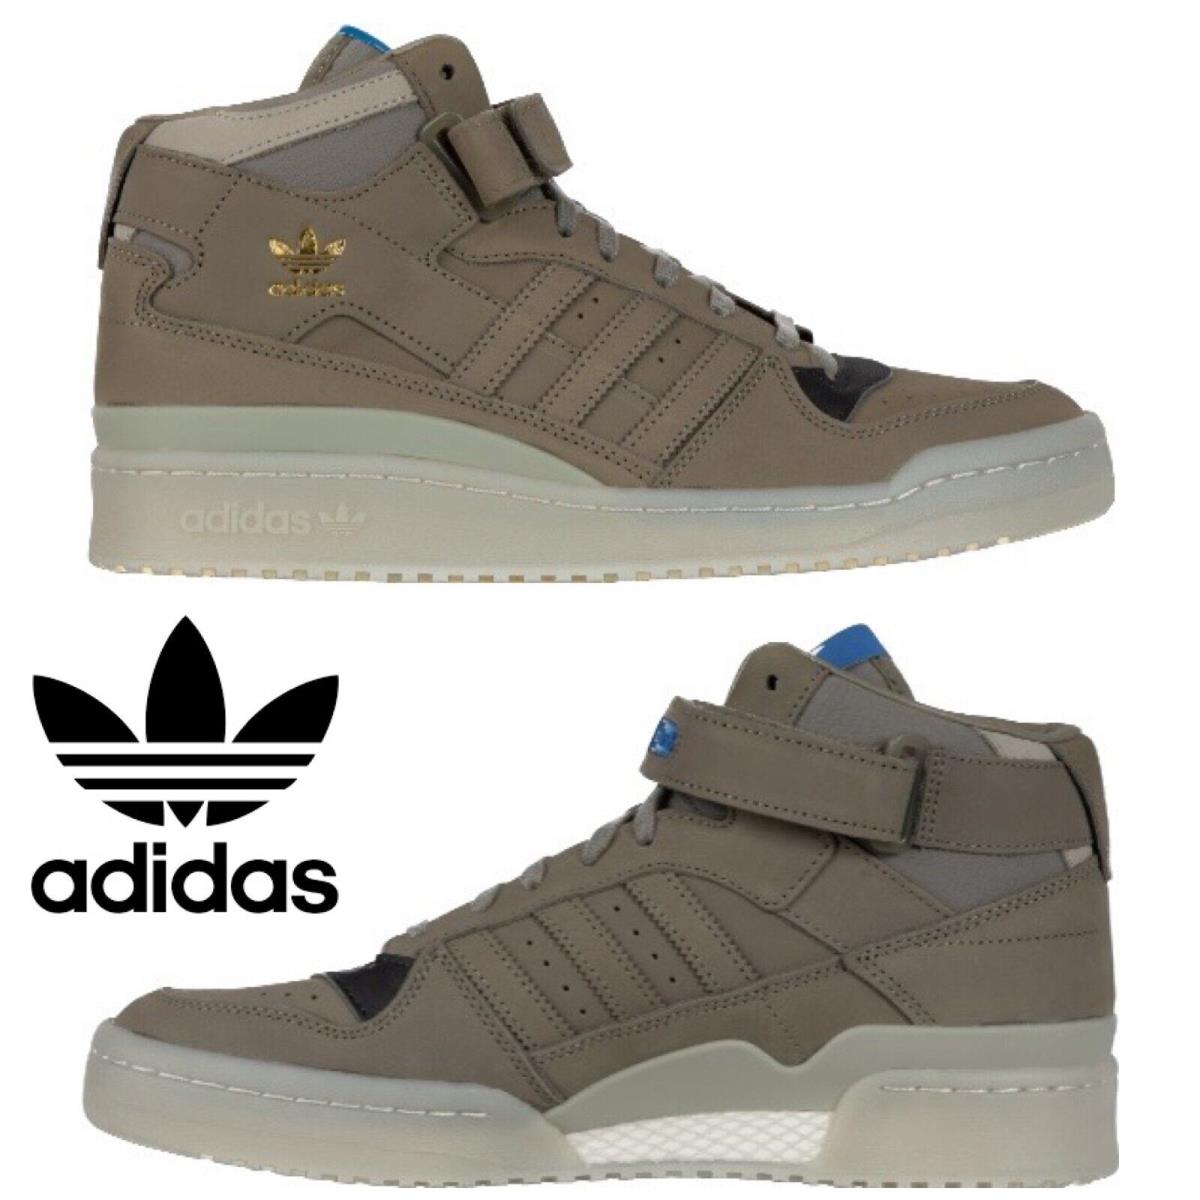 Adidas Originals Forum Mid Men`s Sneakers Comfort Sport Casual Shoes Grey